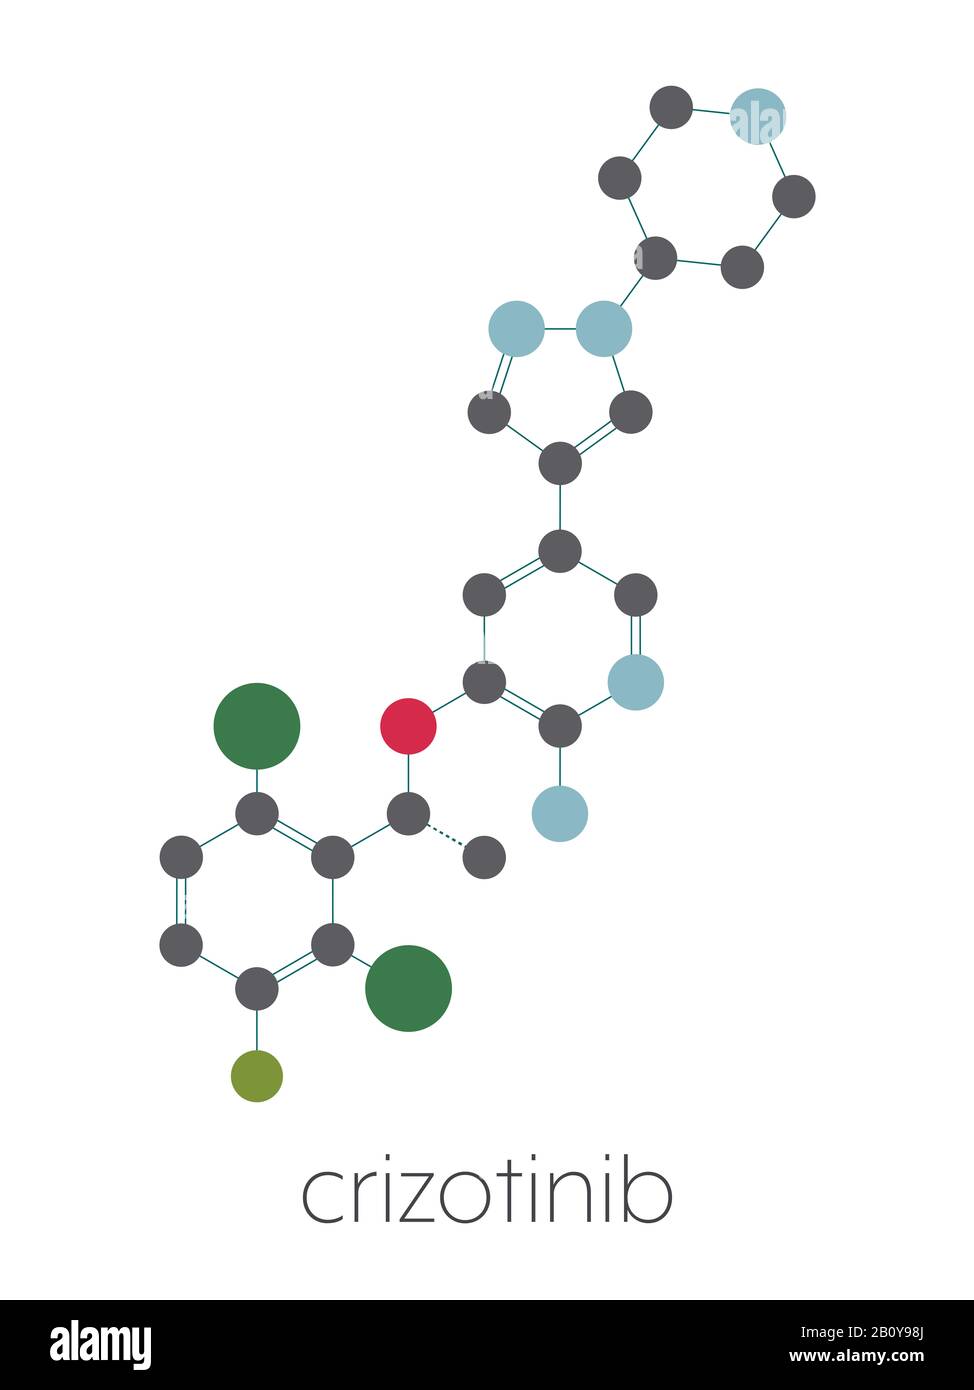 Crizotinib anti-cancer drug molecule, illustration Stock Photo